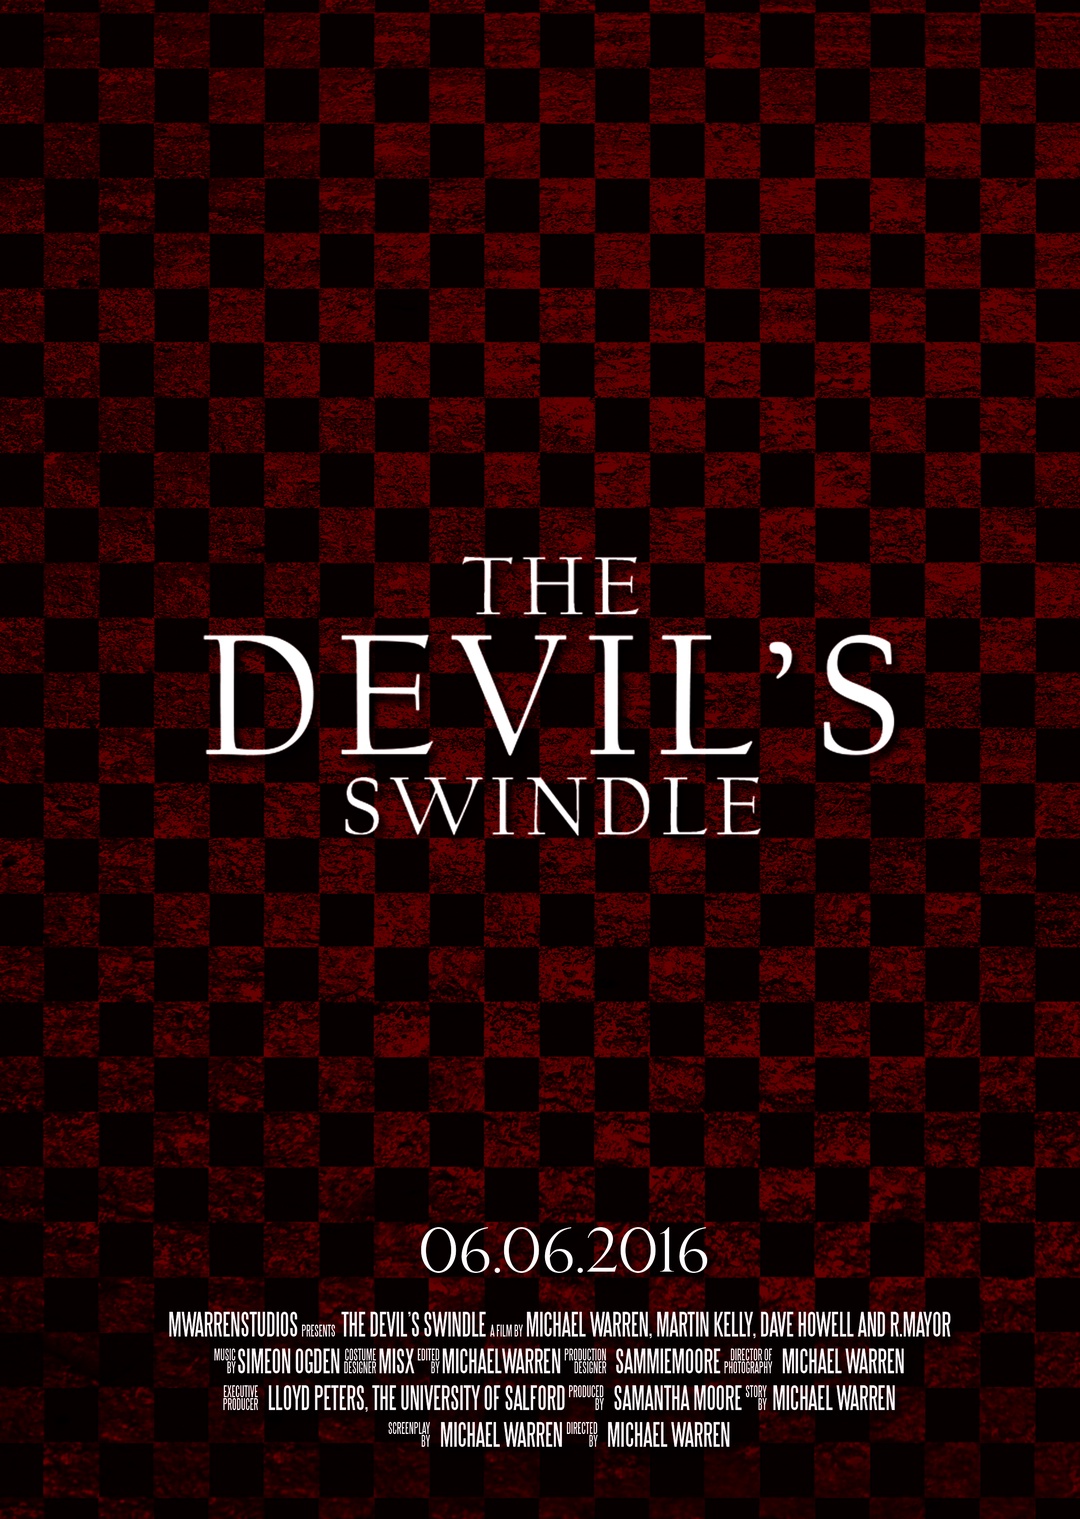 The Devil's Swindle